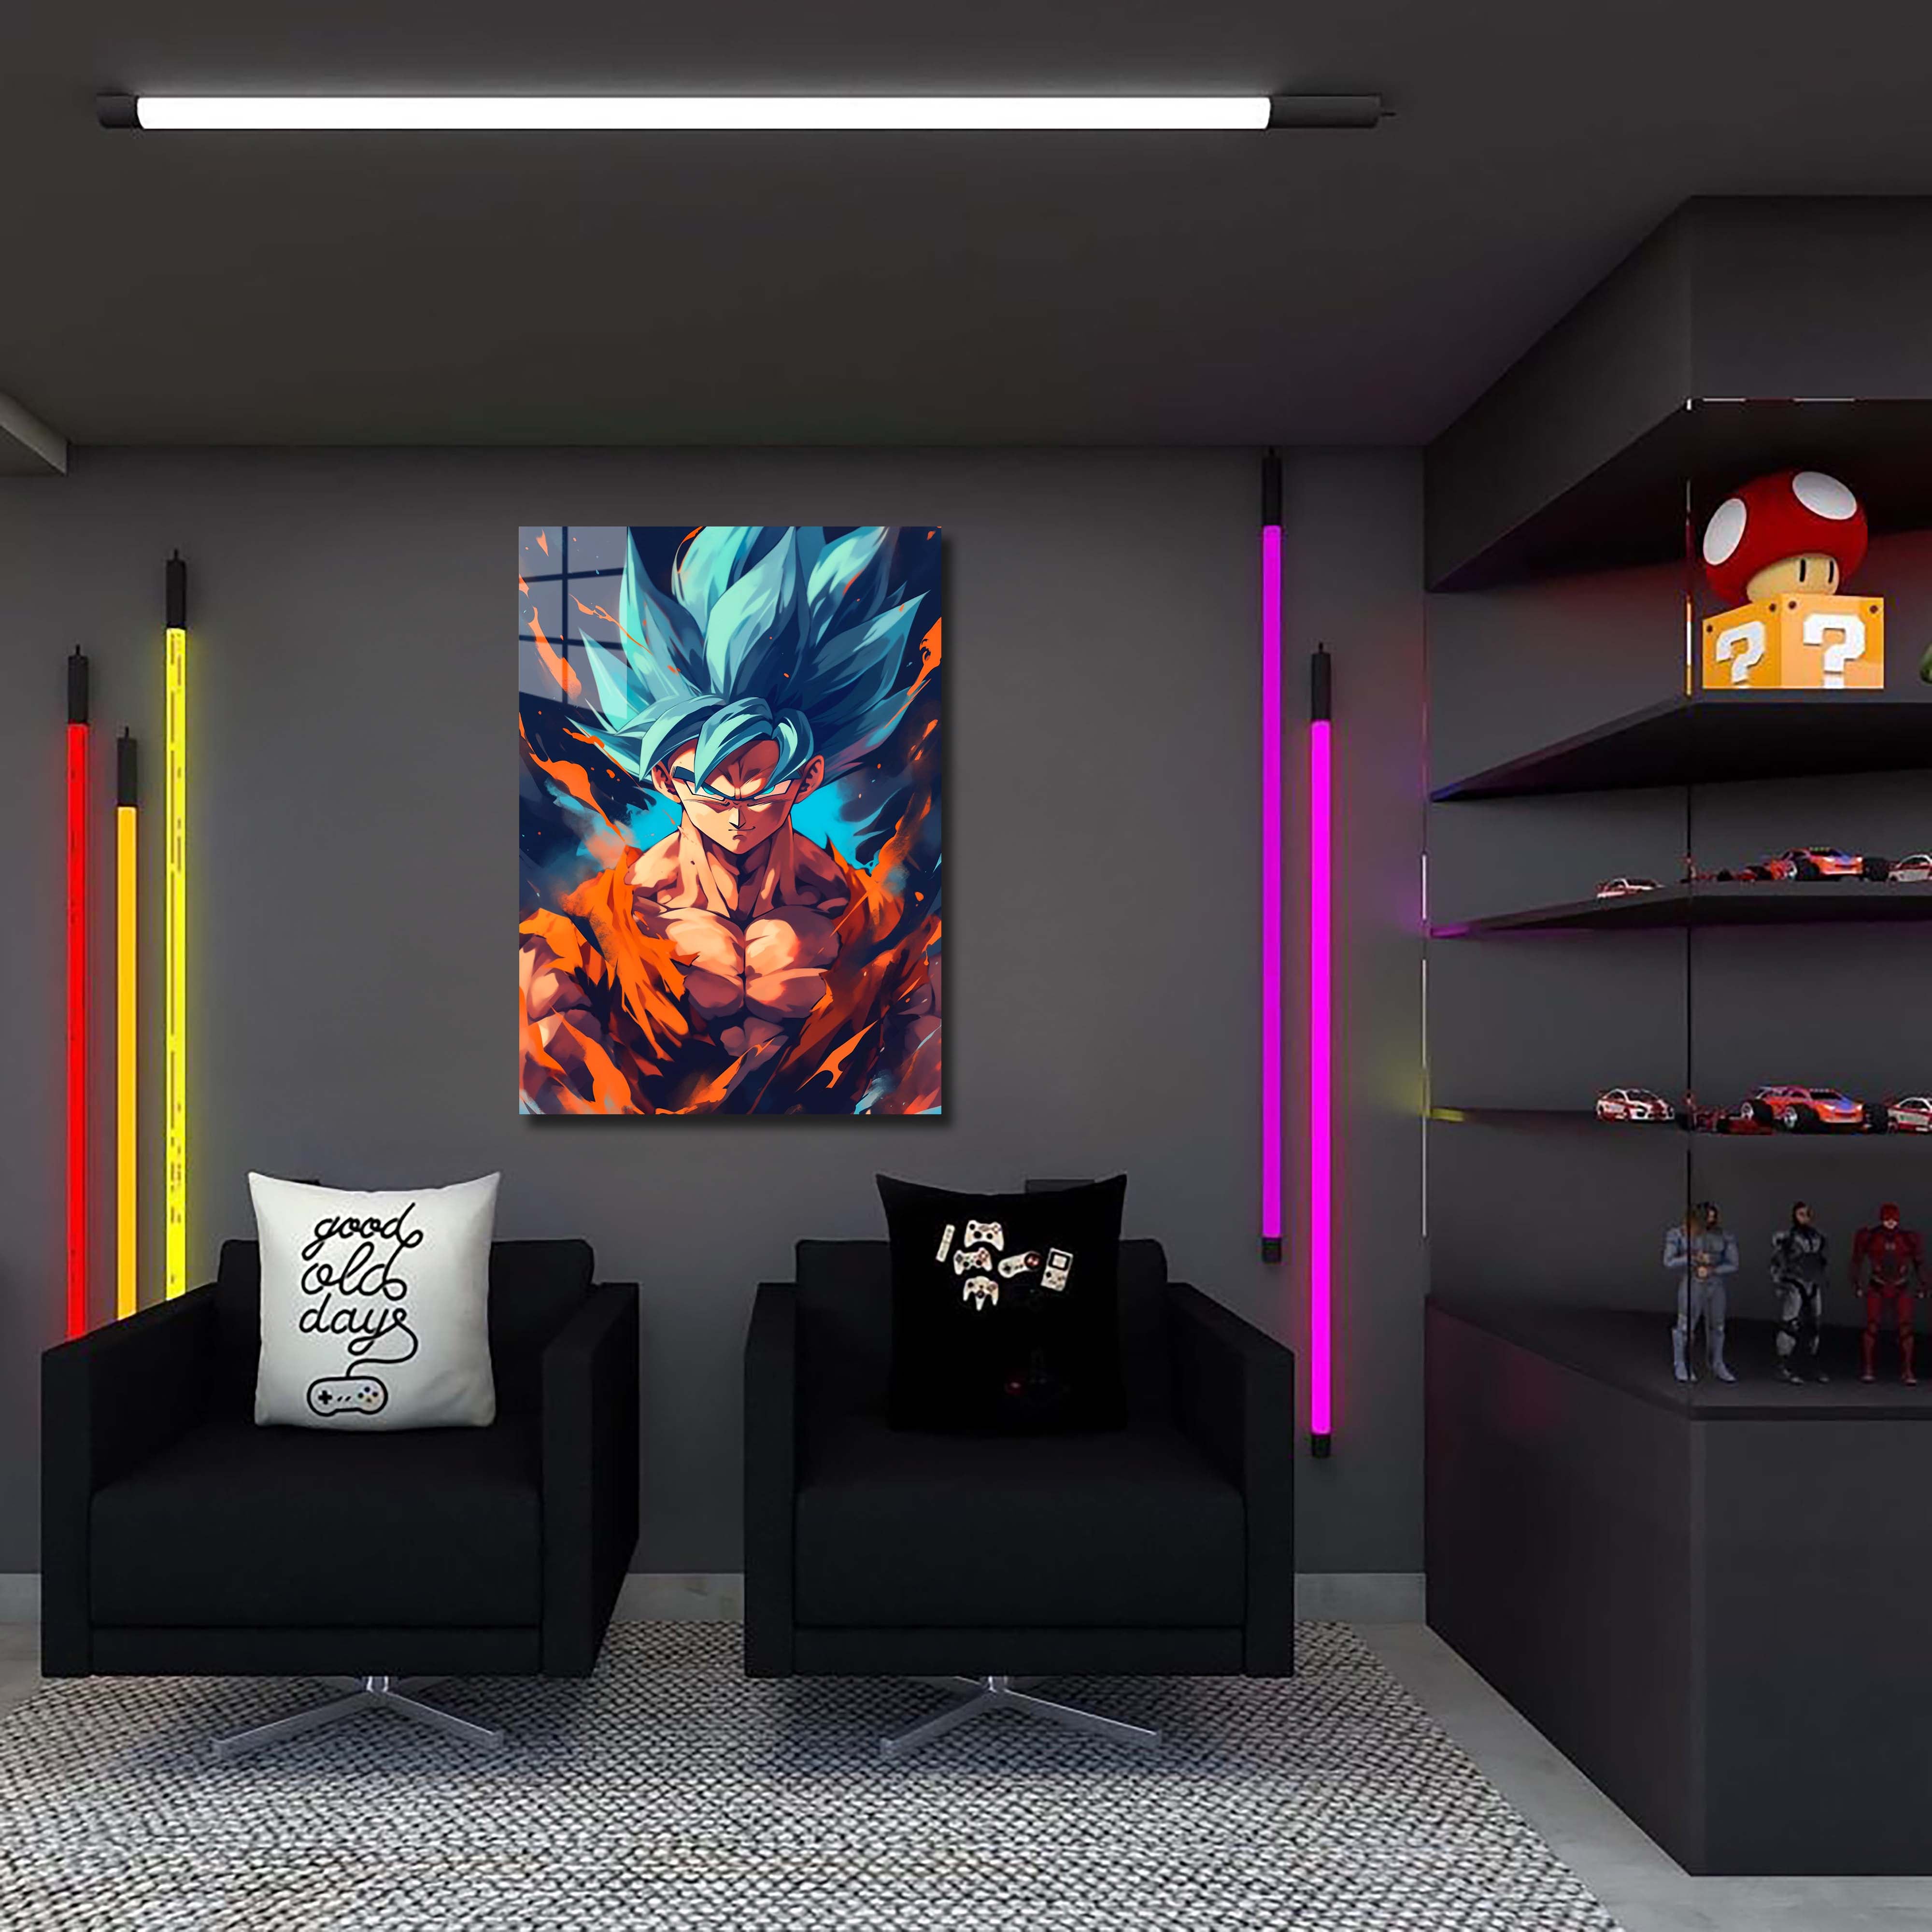 Son Goku-designed by @Moqotib